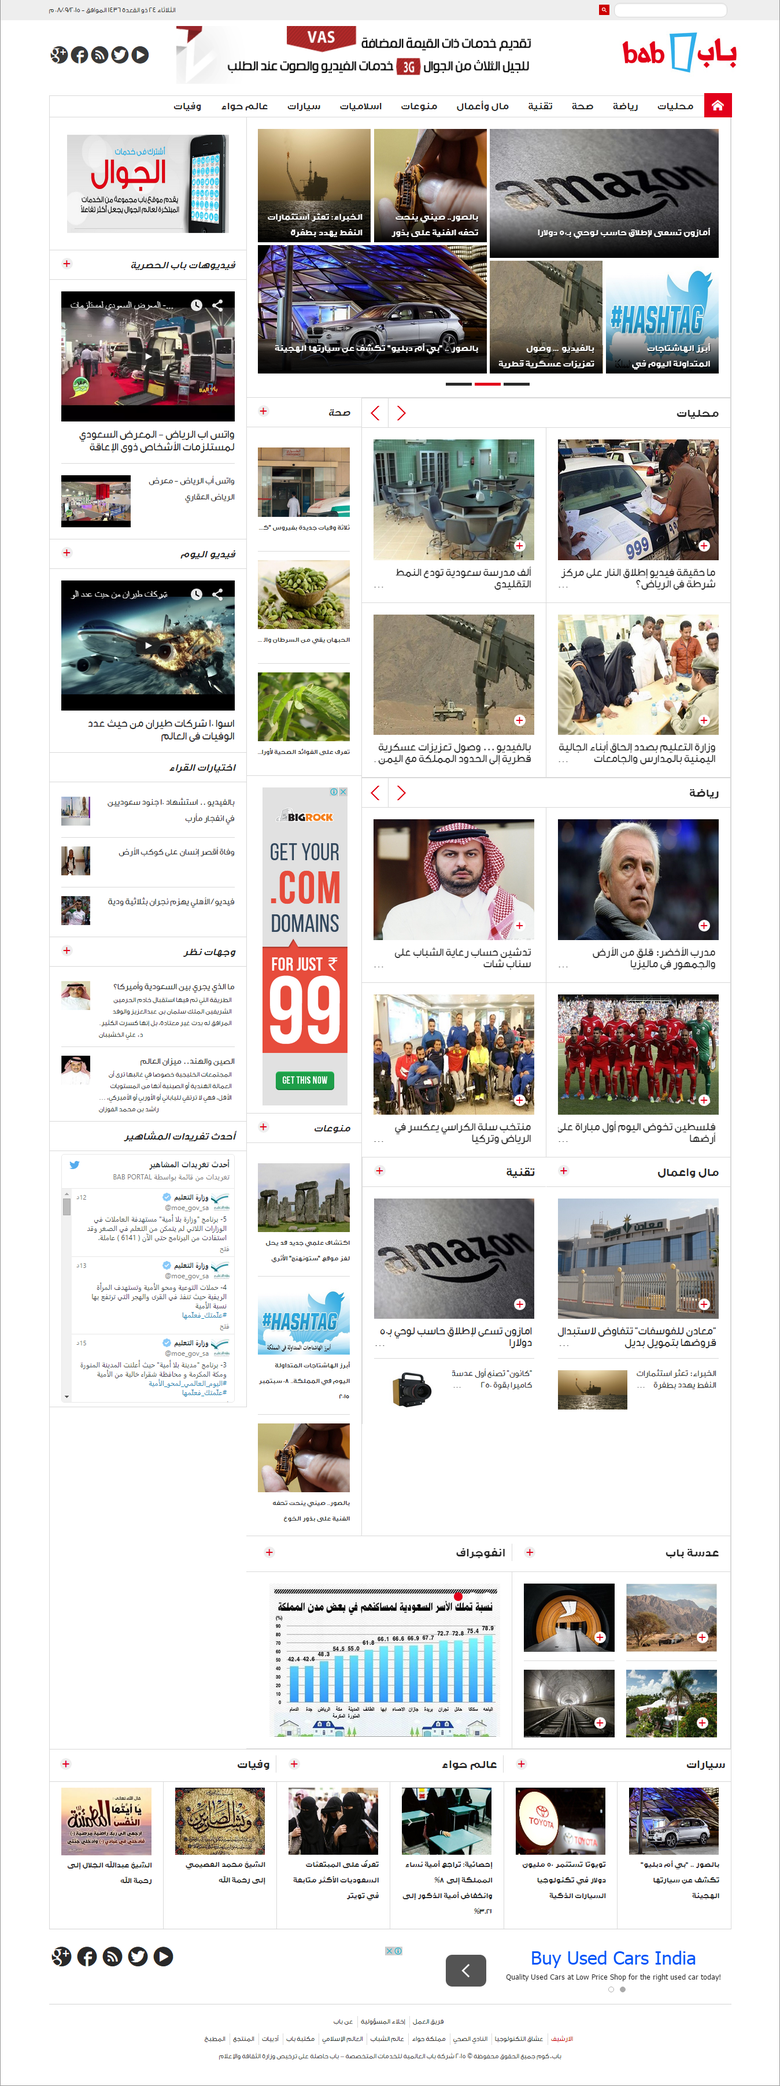 Online News Portal